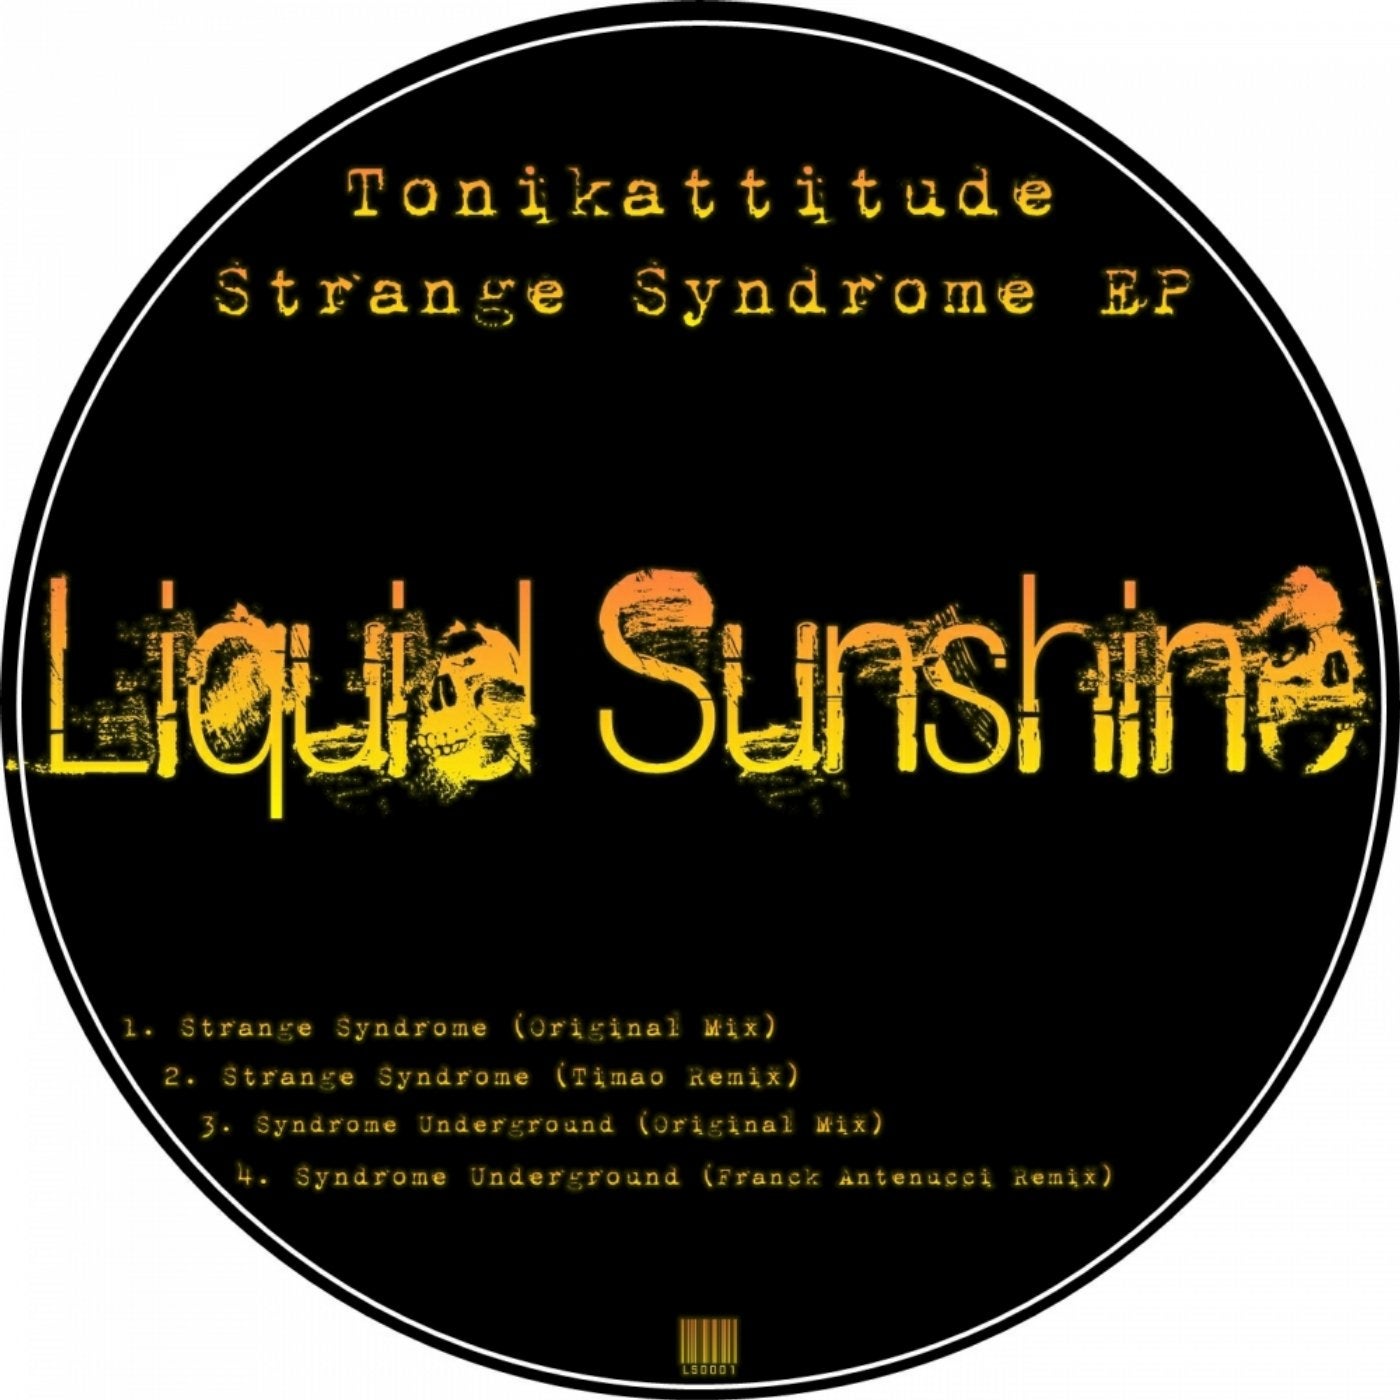 Strange Syndrome EP